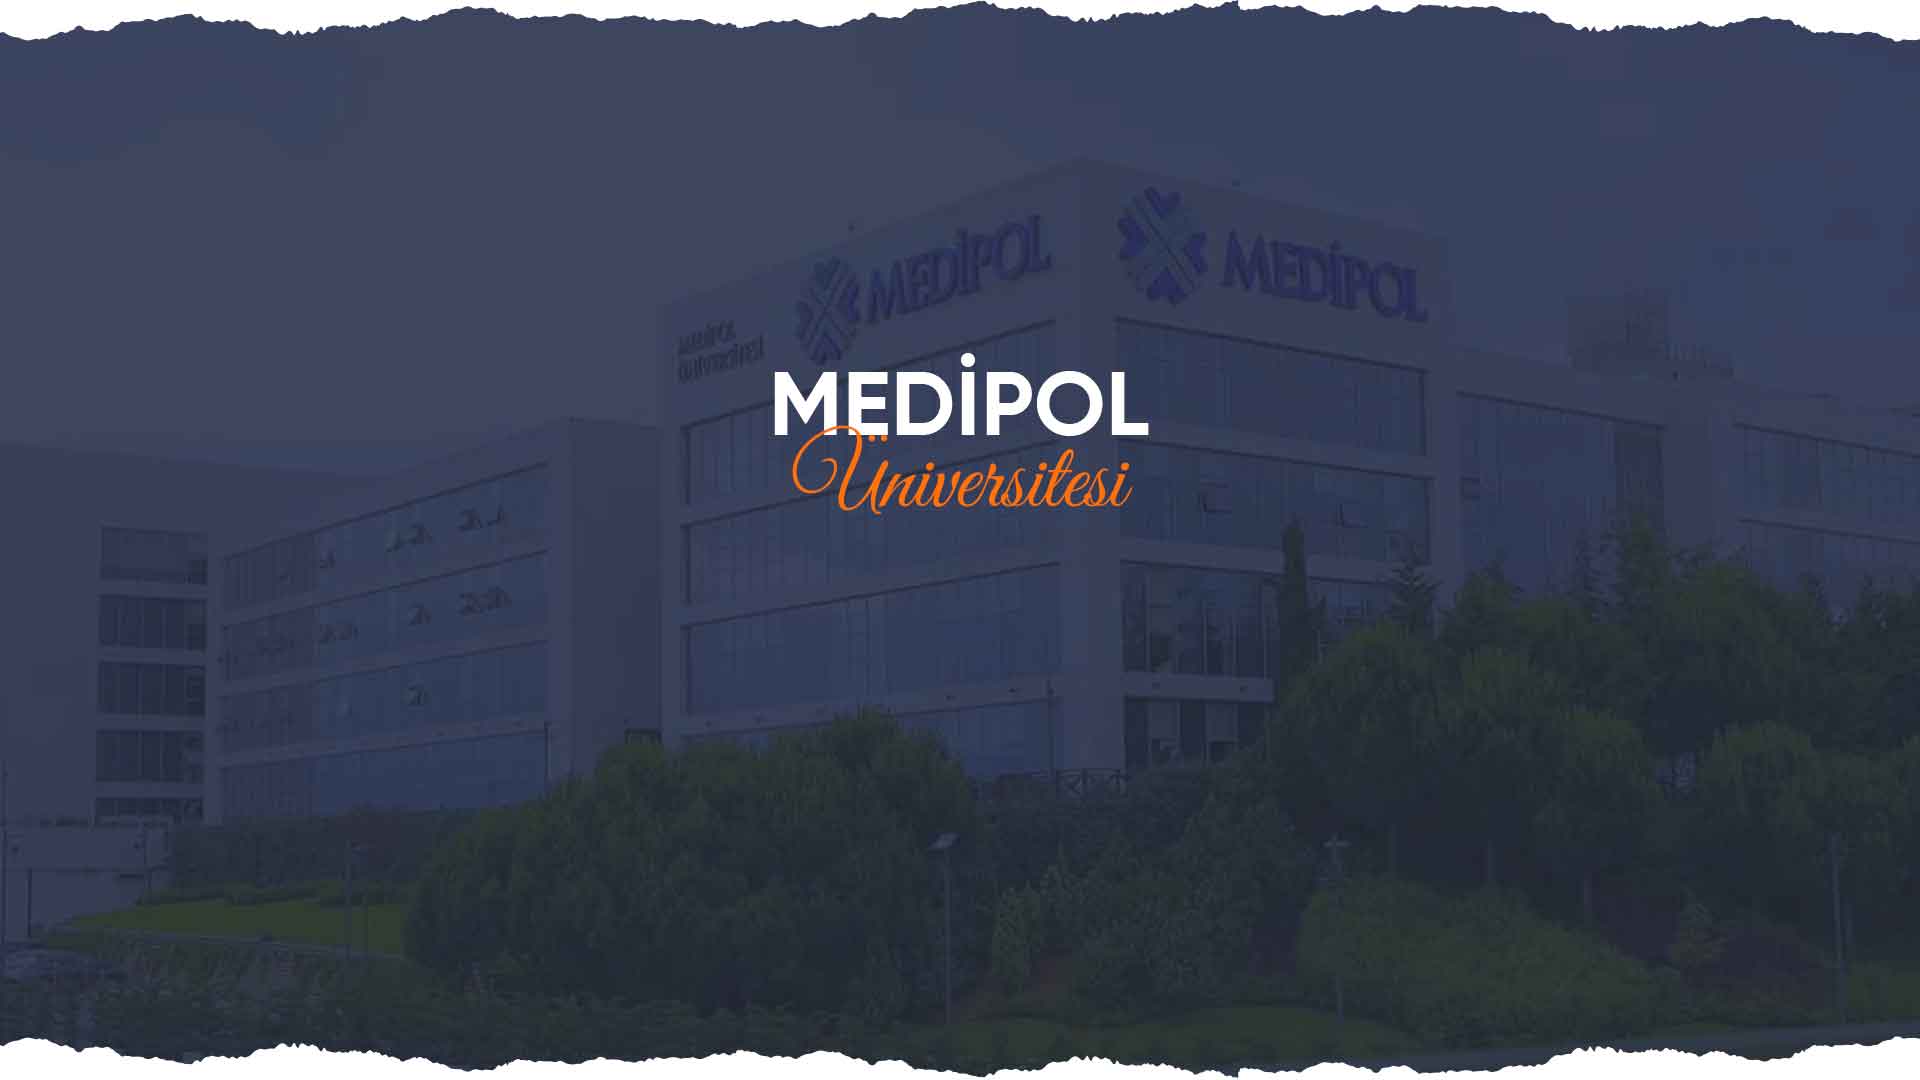 Medipol University